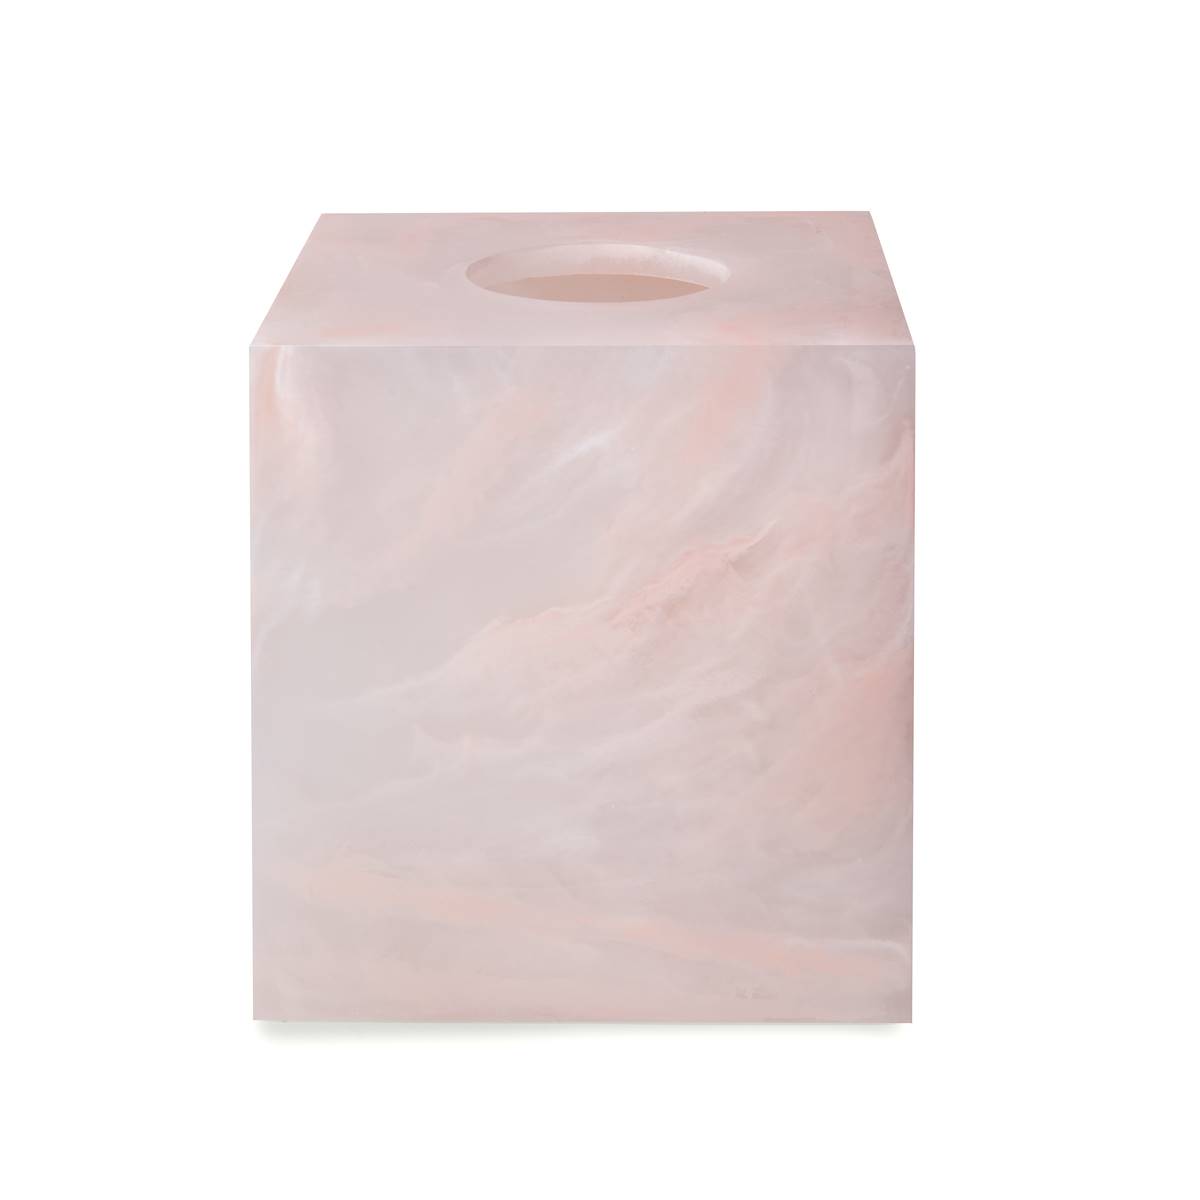 Cassadecor Rose Bath Accessories - Tissue Holder